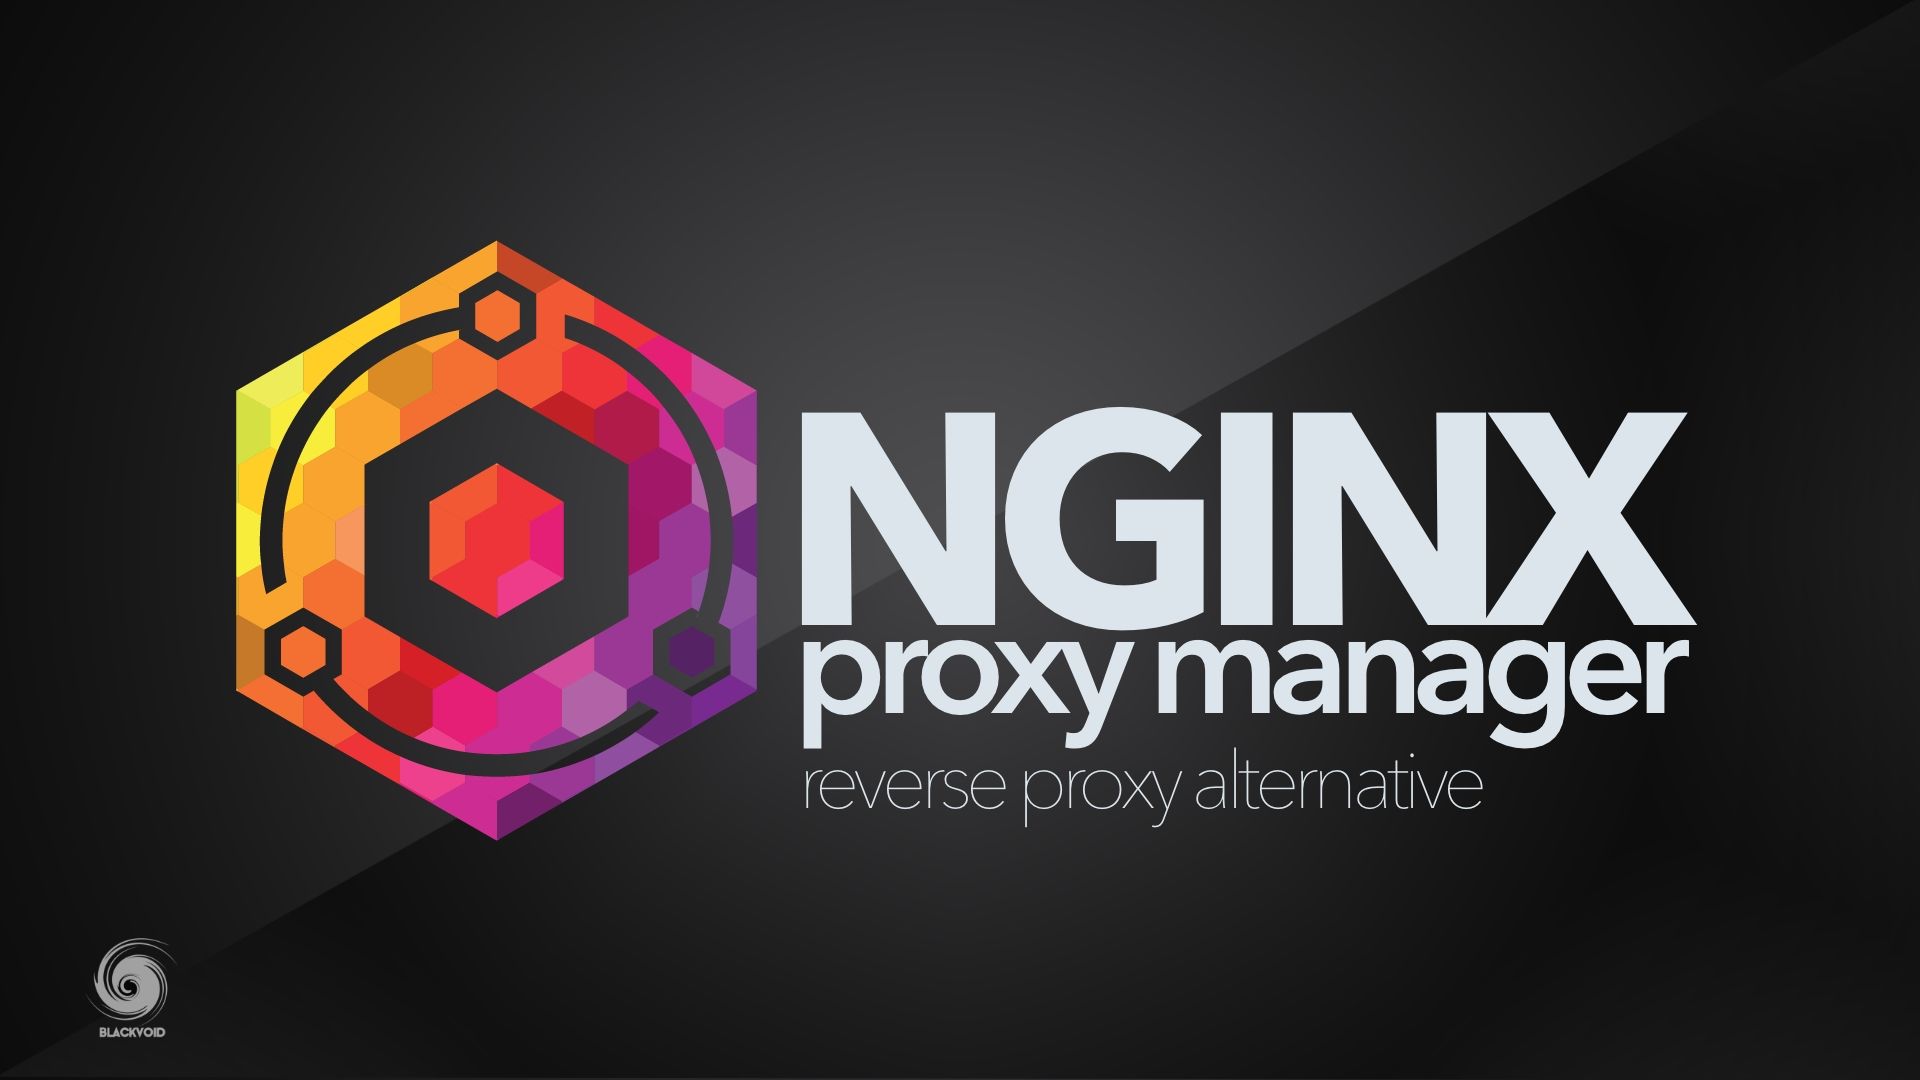 NGINX proxy manager